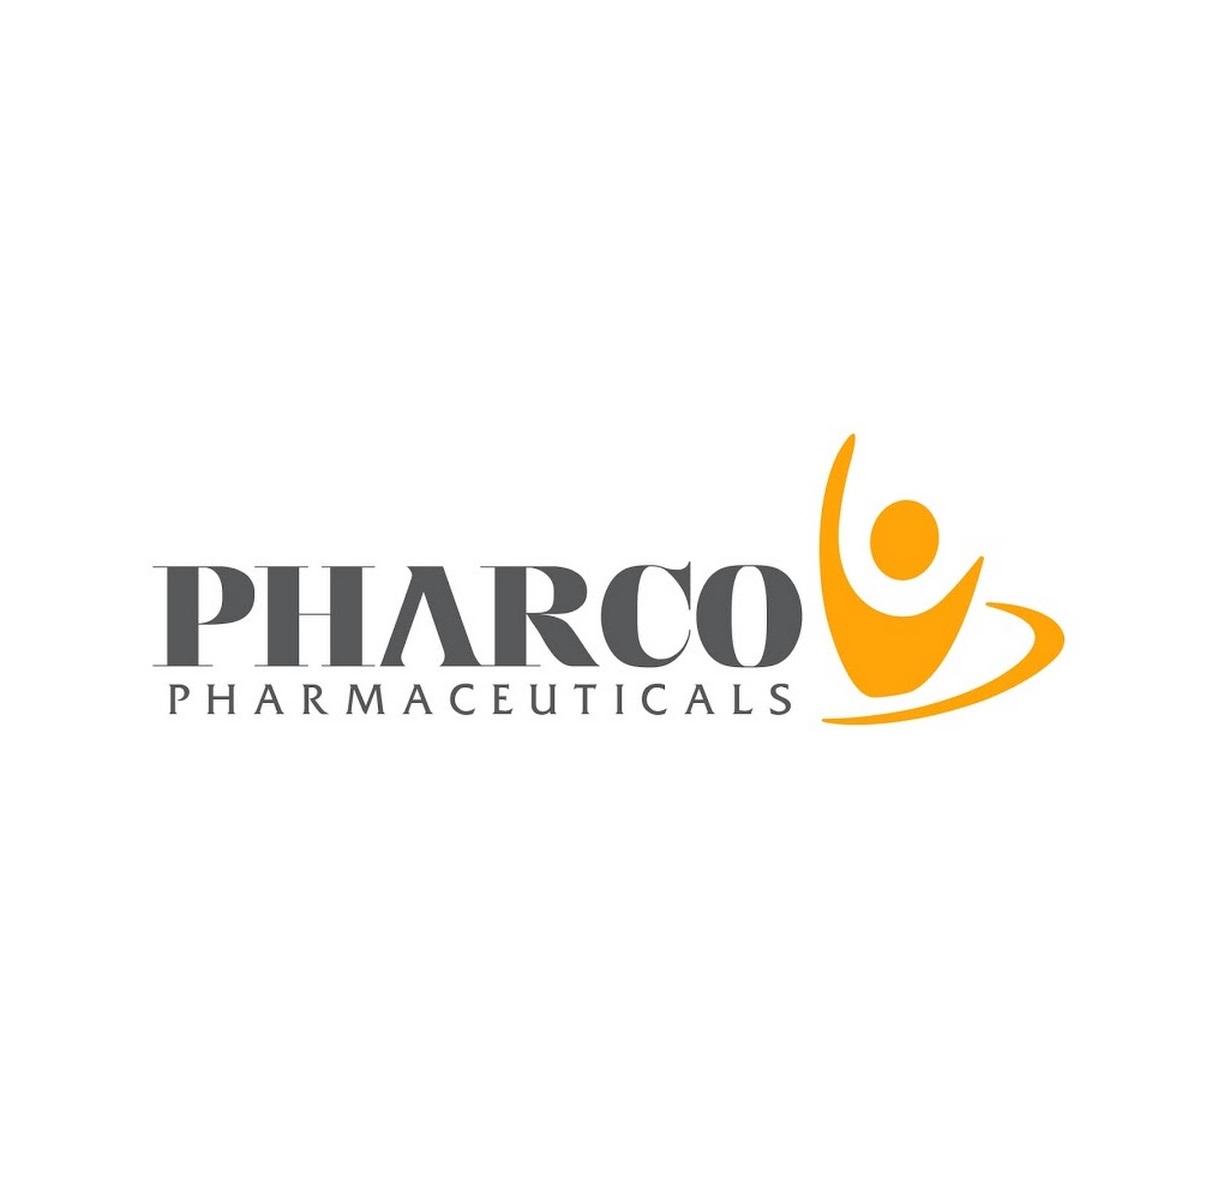 Pharco B international